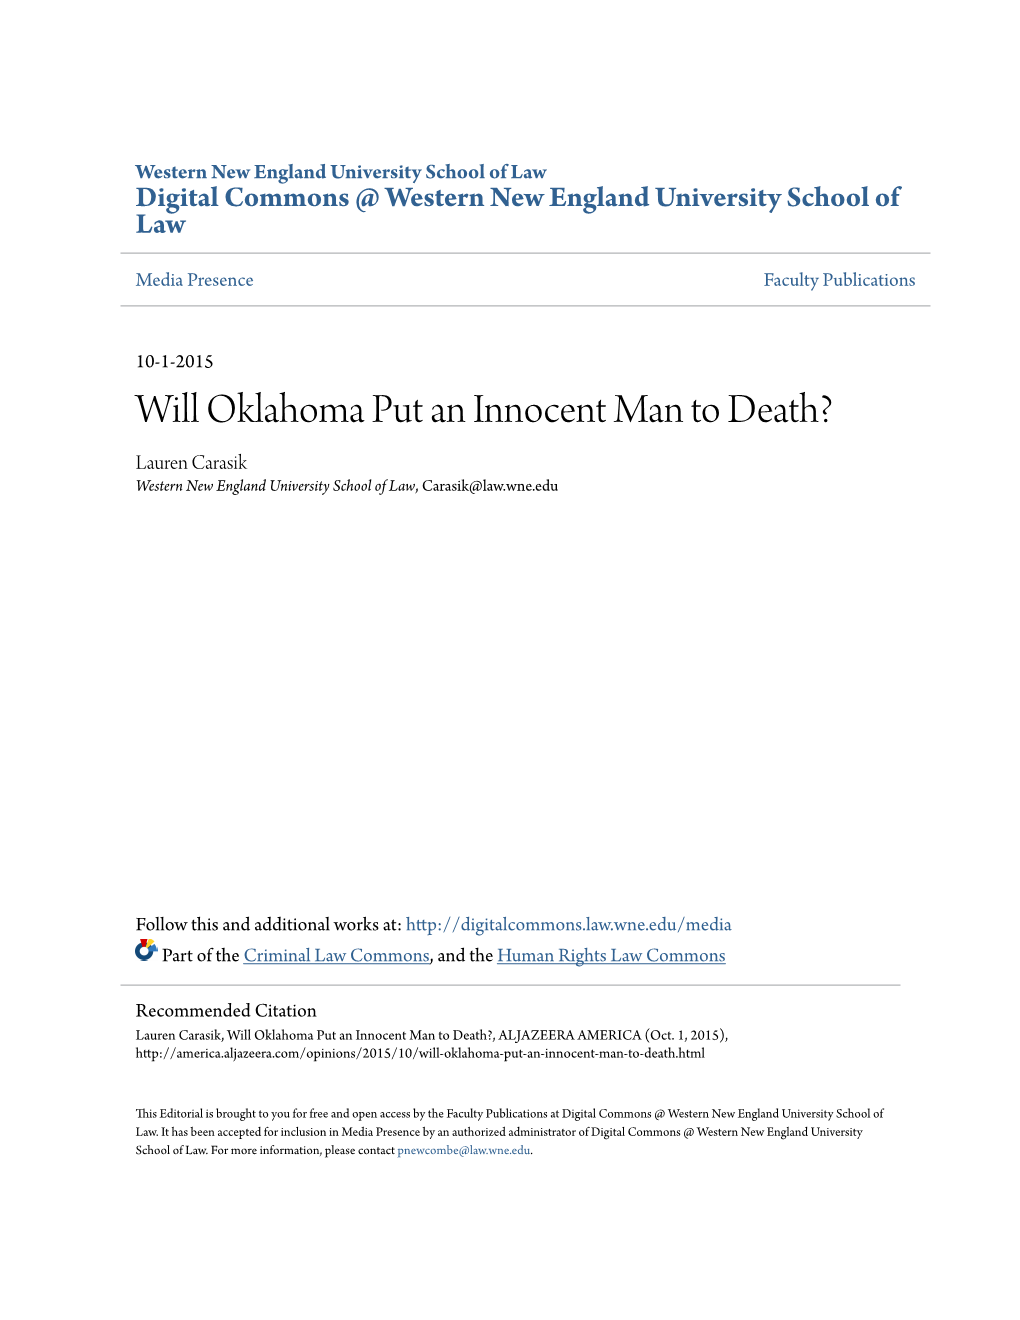 Will Oklahoma Put an Innocent Man to Death? Lauren Carasik Western New England University School of Law, Carasik@Law.Wne.Edu